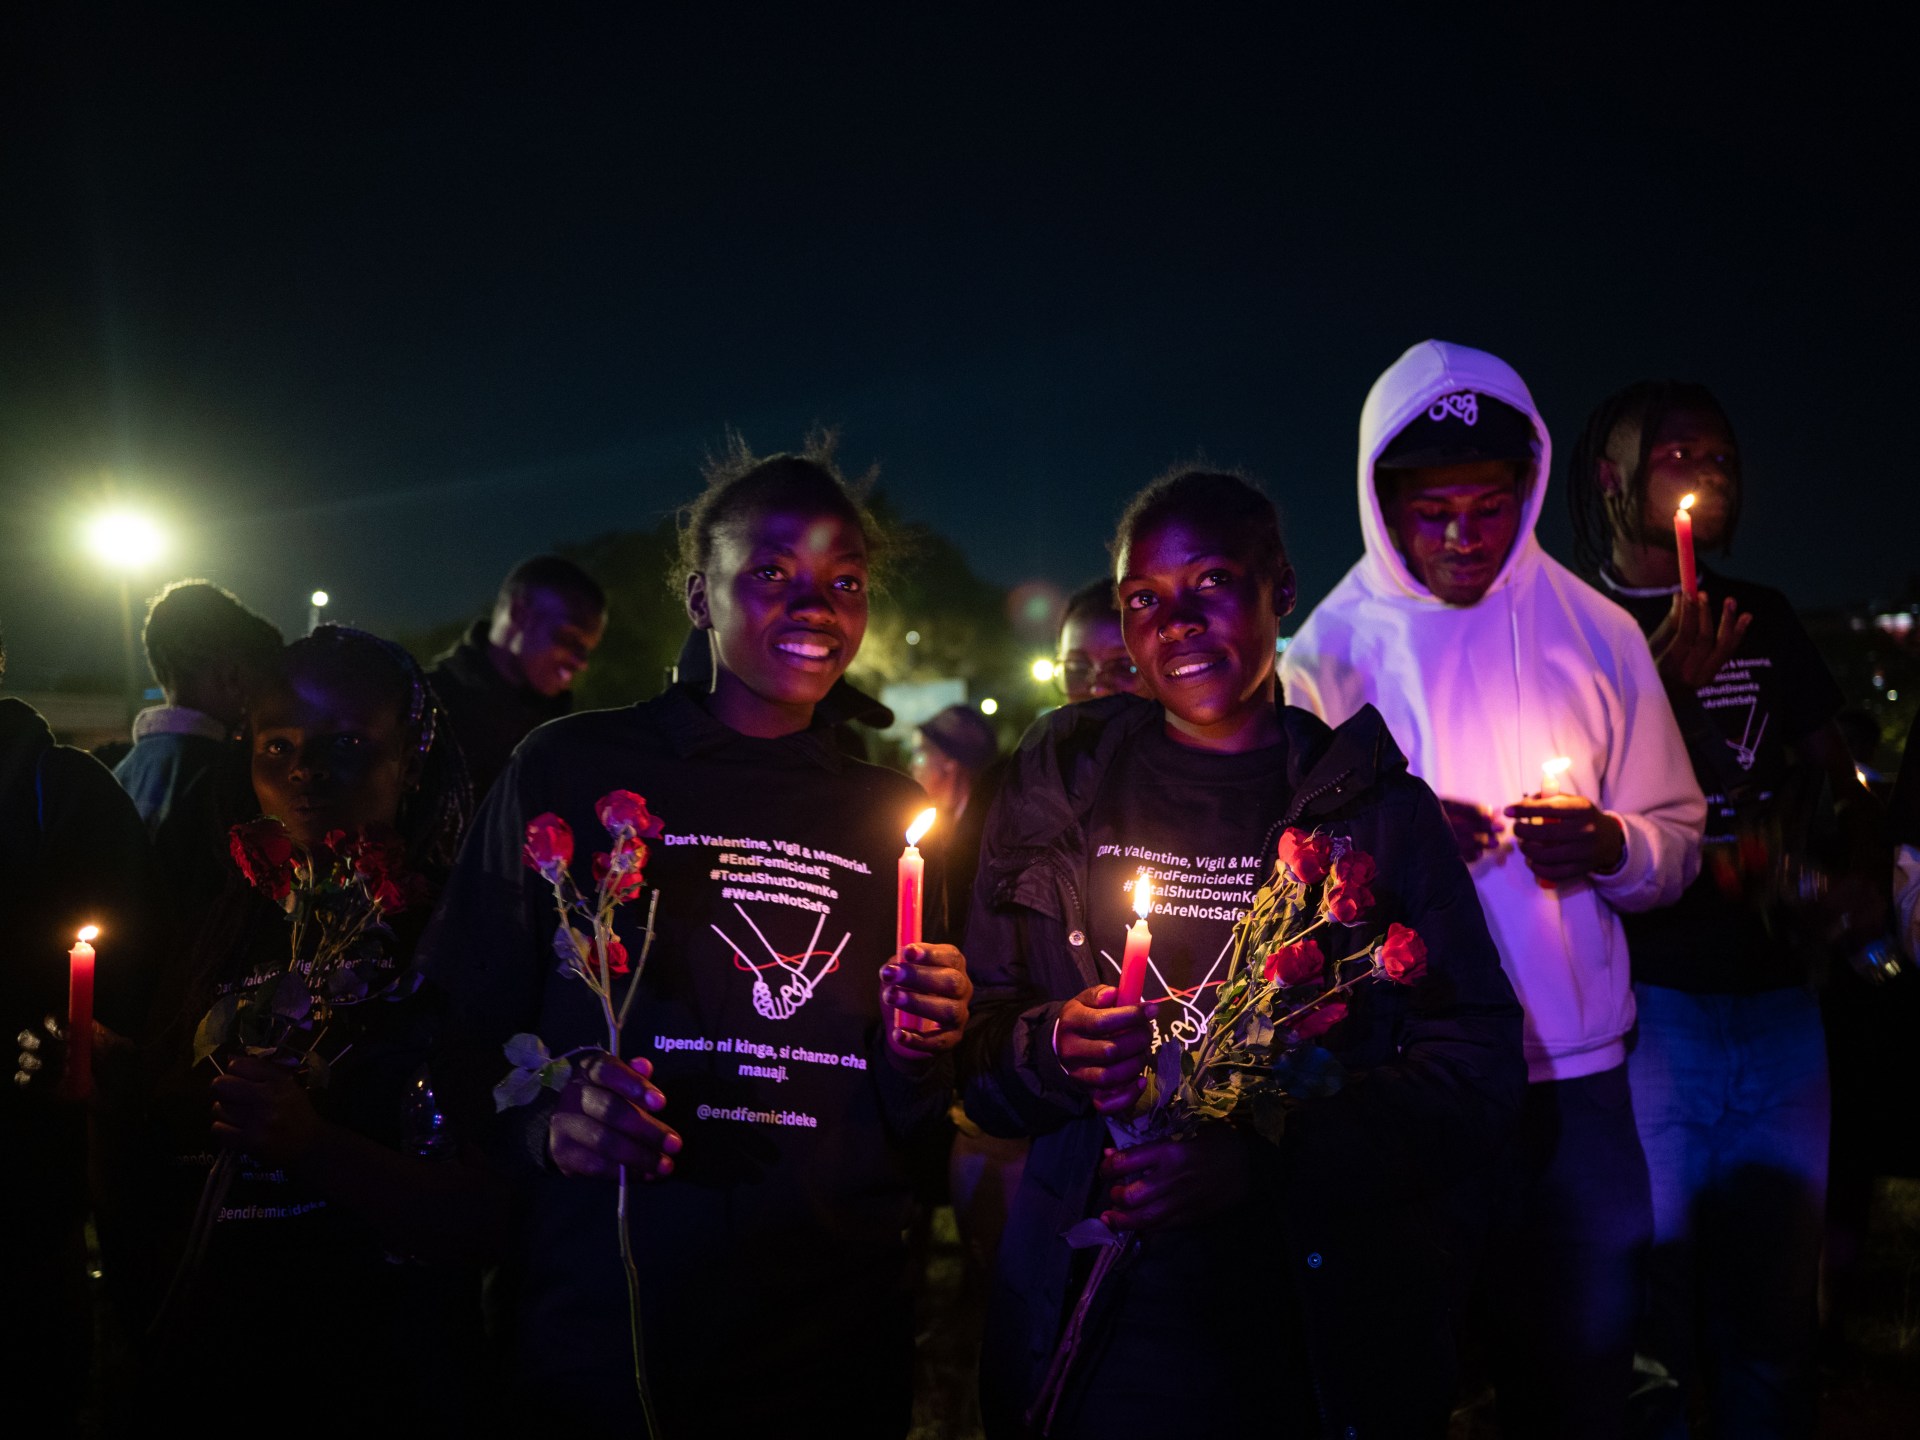 In Kenya, women hold ‘Dark Valentine’ vigils to press for end to femicides | Women